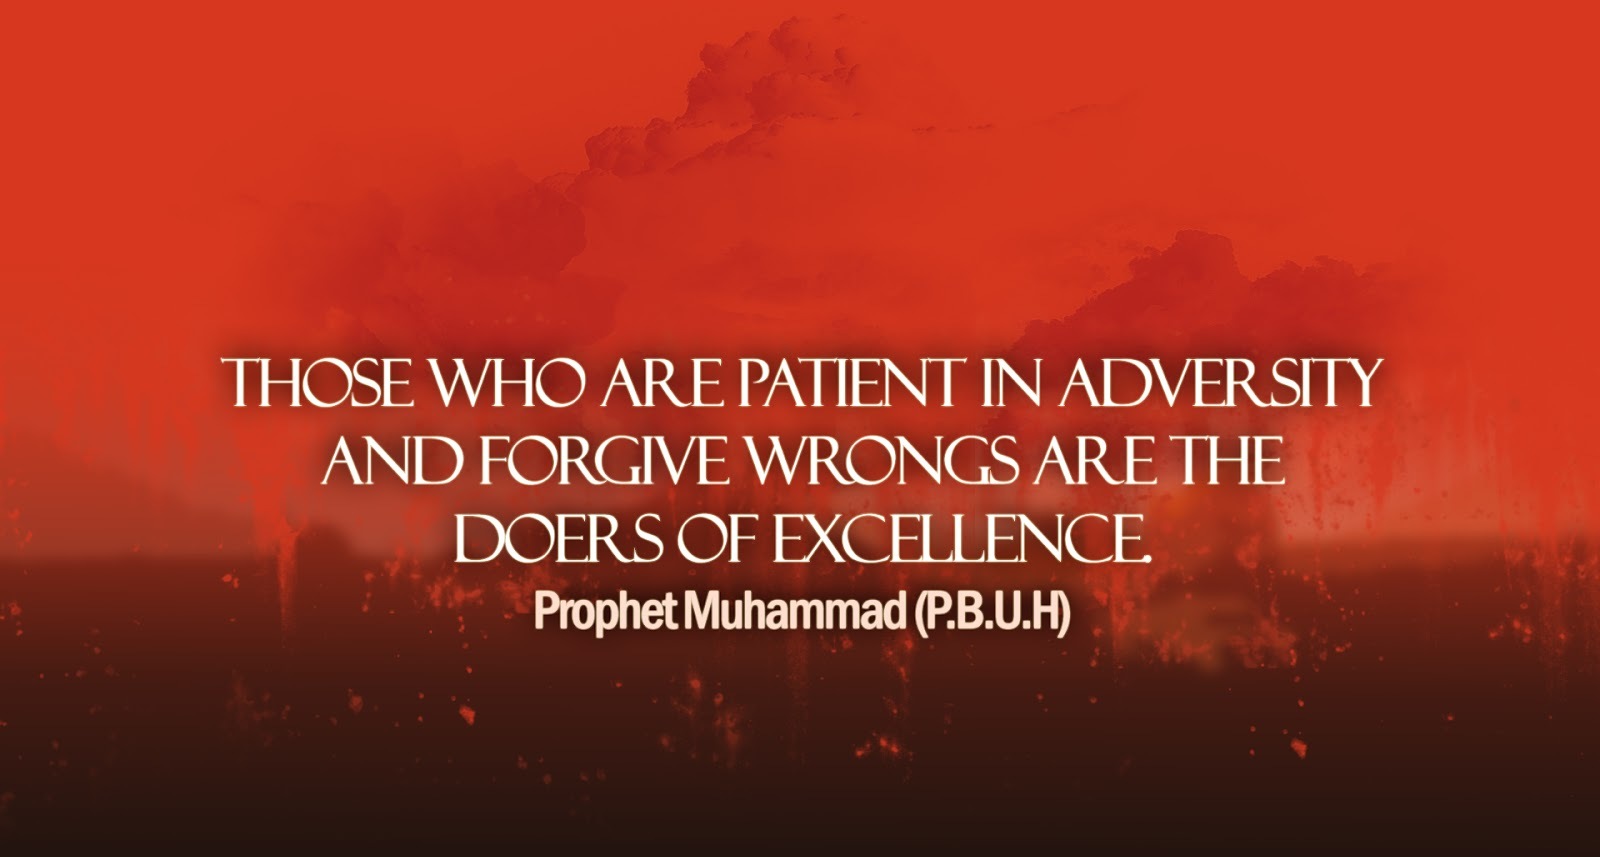 patient, adversity,forgive wrongs,forgive, wrongs,sayings,qoutes,islam,islamic teaching,muslims,muslim,doers,excellence,Prophet Muhammad (P.B.U.H),Prophet, Muhammad (P.B.U.H),teachings of Prophet Muhammad (P.B.U.H),sayings of Prophet Muhammad (P.B.U.H),Patient In Adversity And Forgive Wrongs,Patient In Adversity